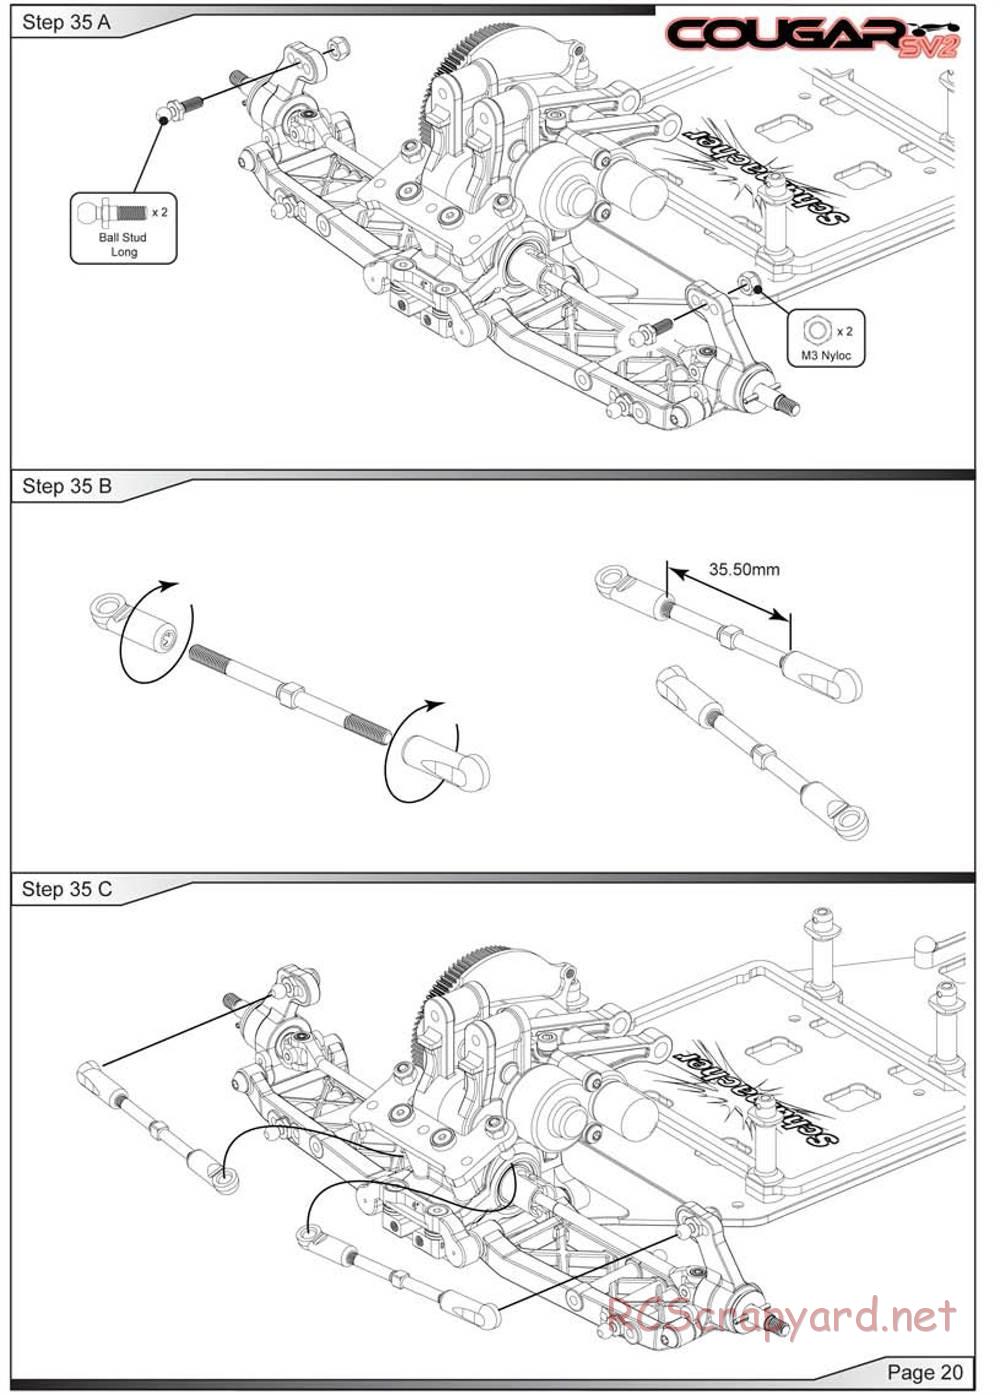 Schumacher - Cougar SV2 - Manual - Page 21